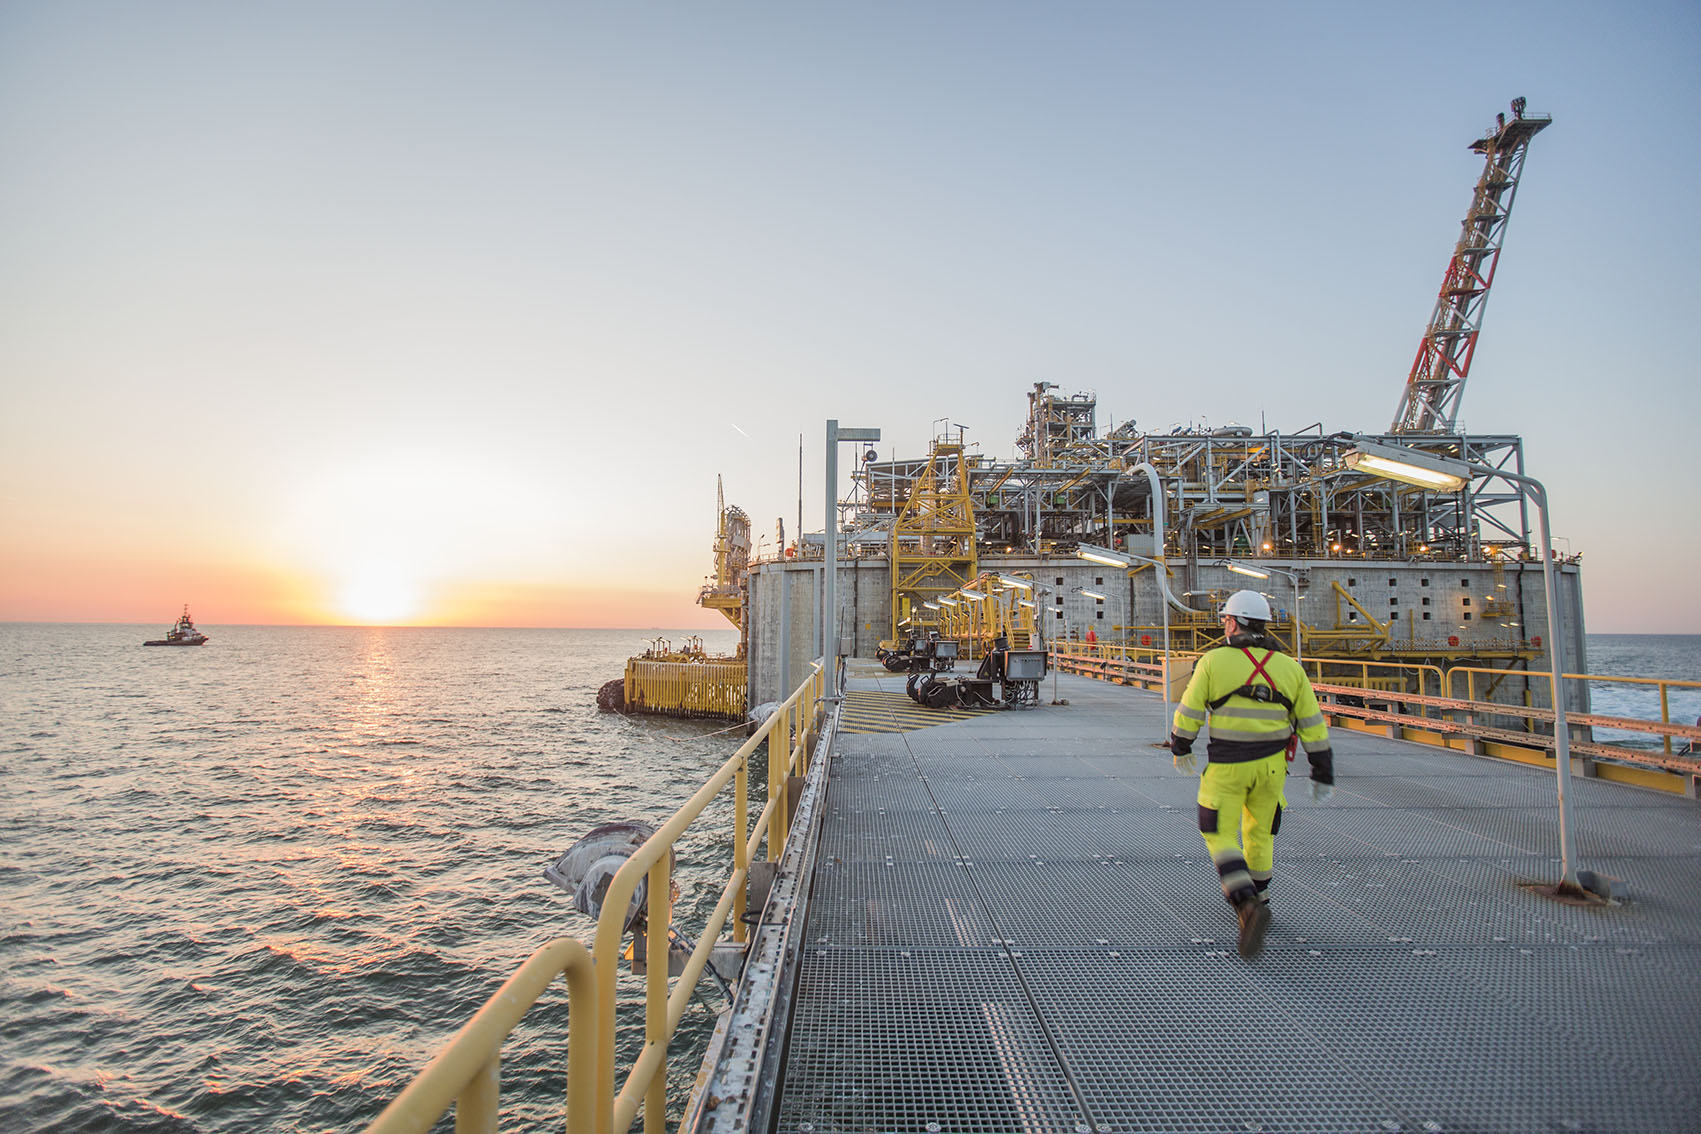 Adriatic LNG hits 10-year operations milestone